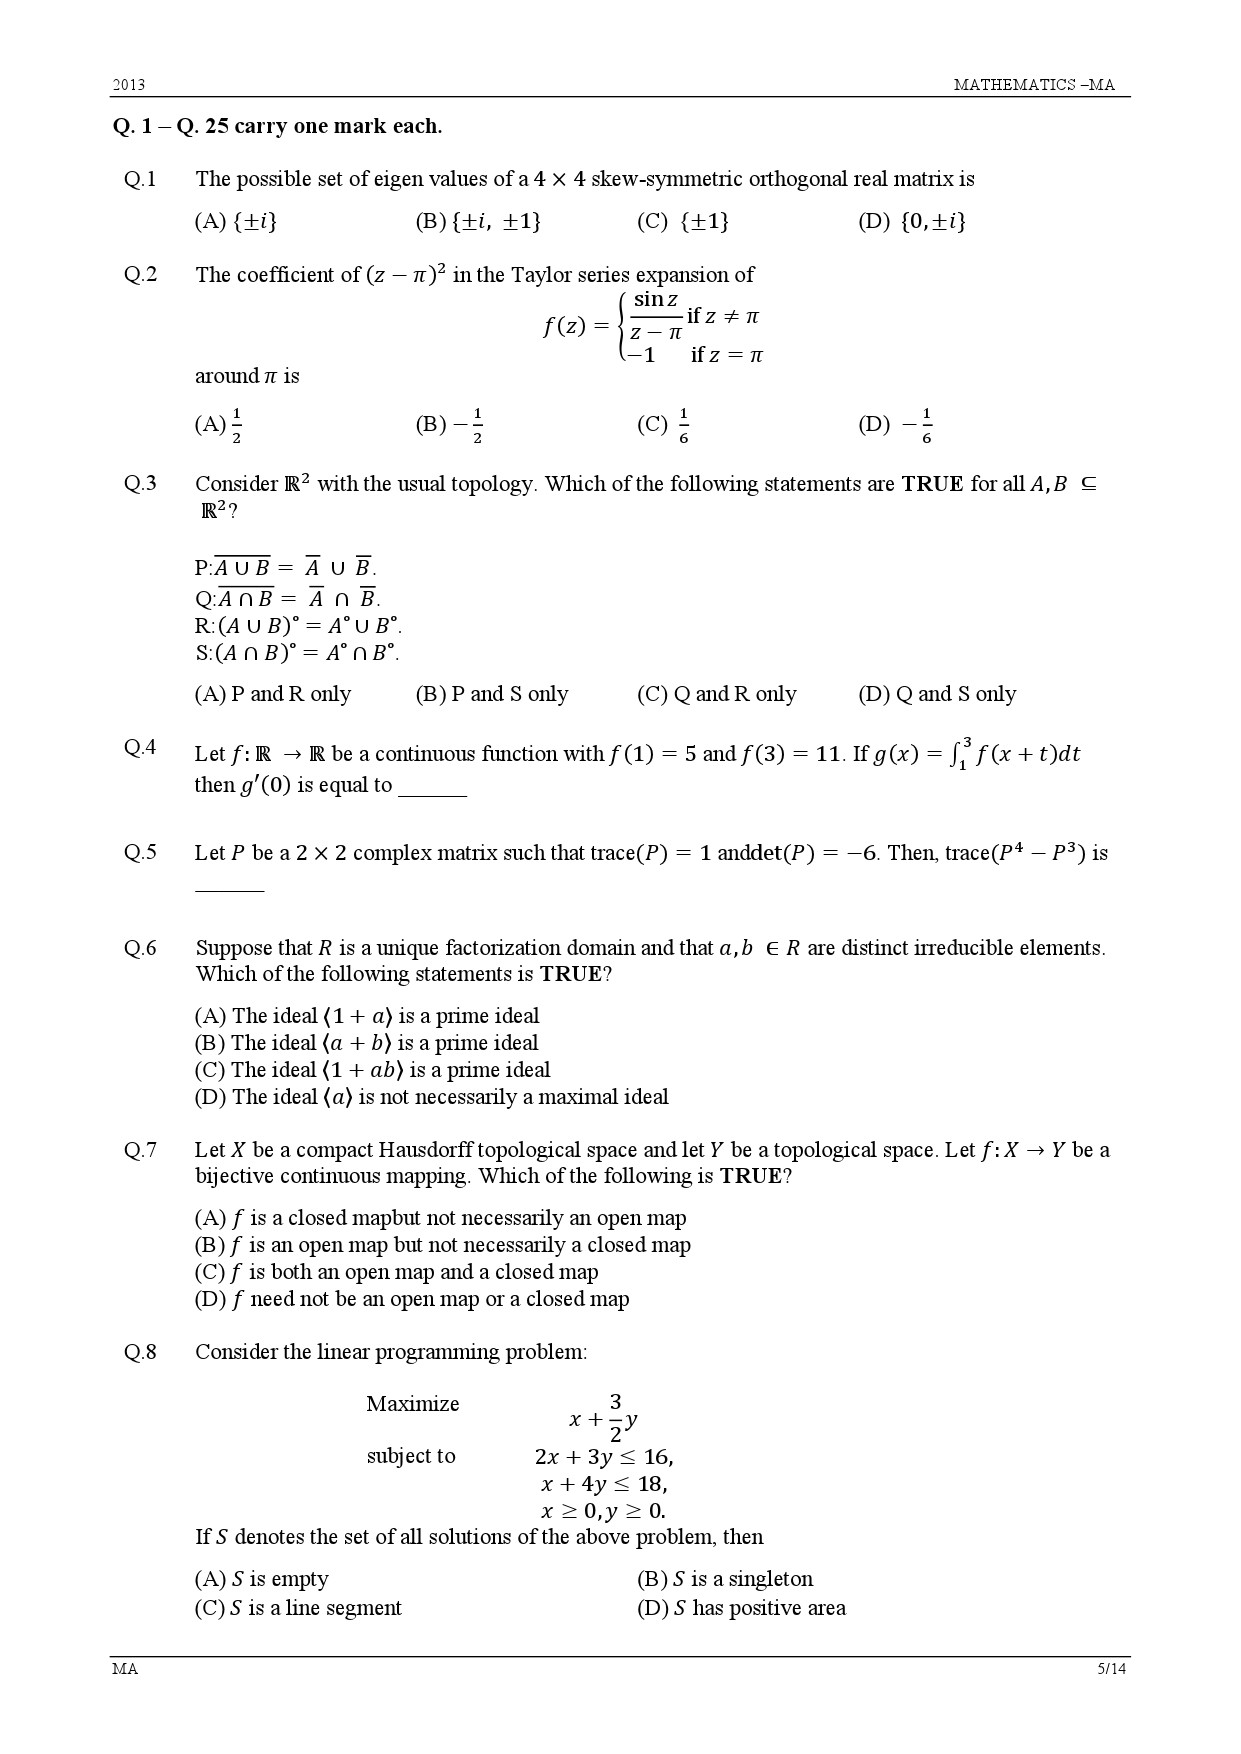 GATE Exam Question Paper 2013 Mathematics 5